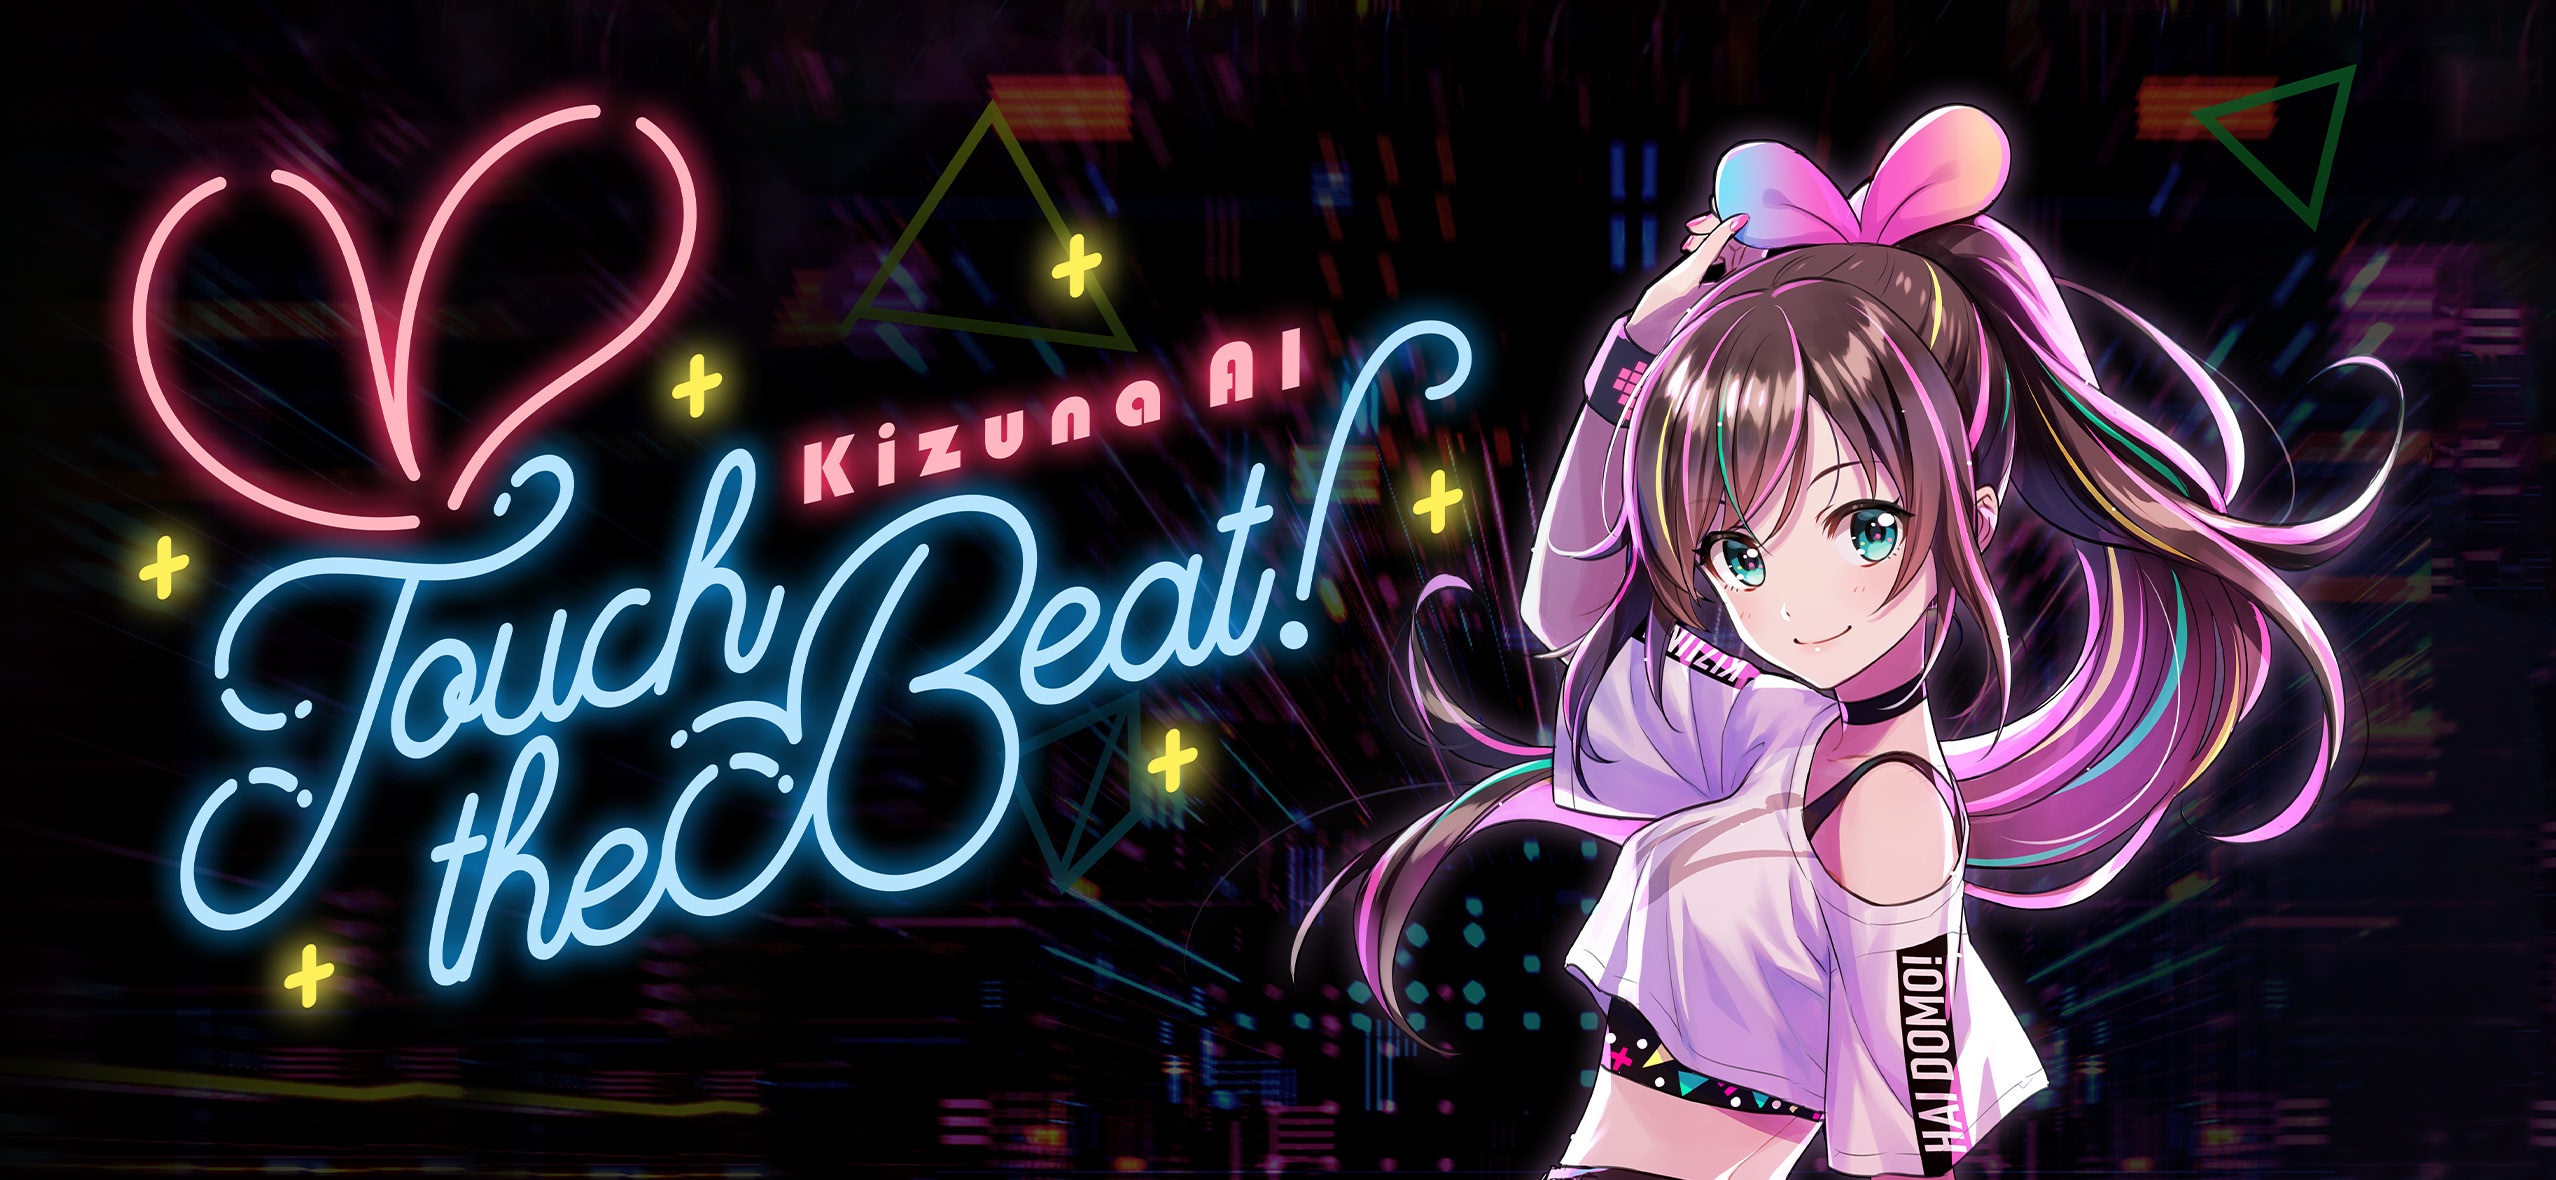 《Kizuna AI: Touch the Beat》